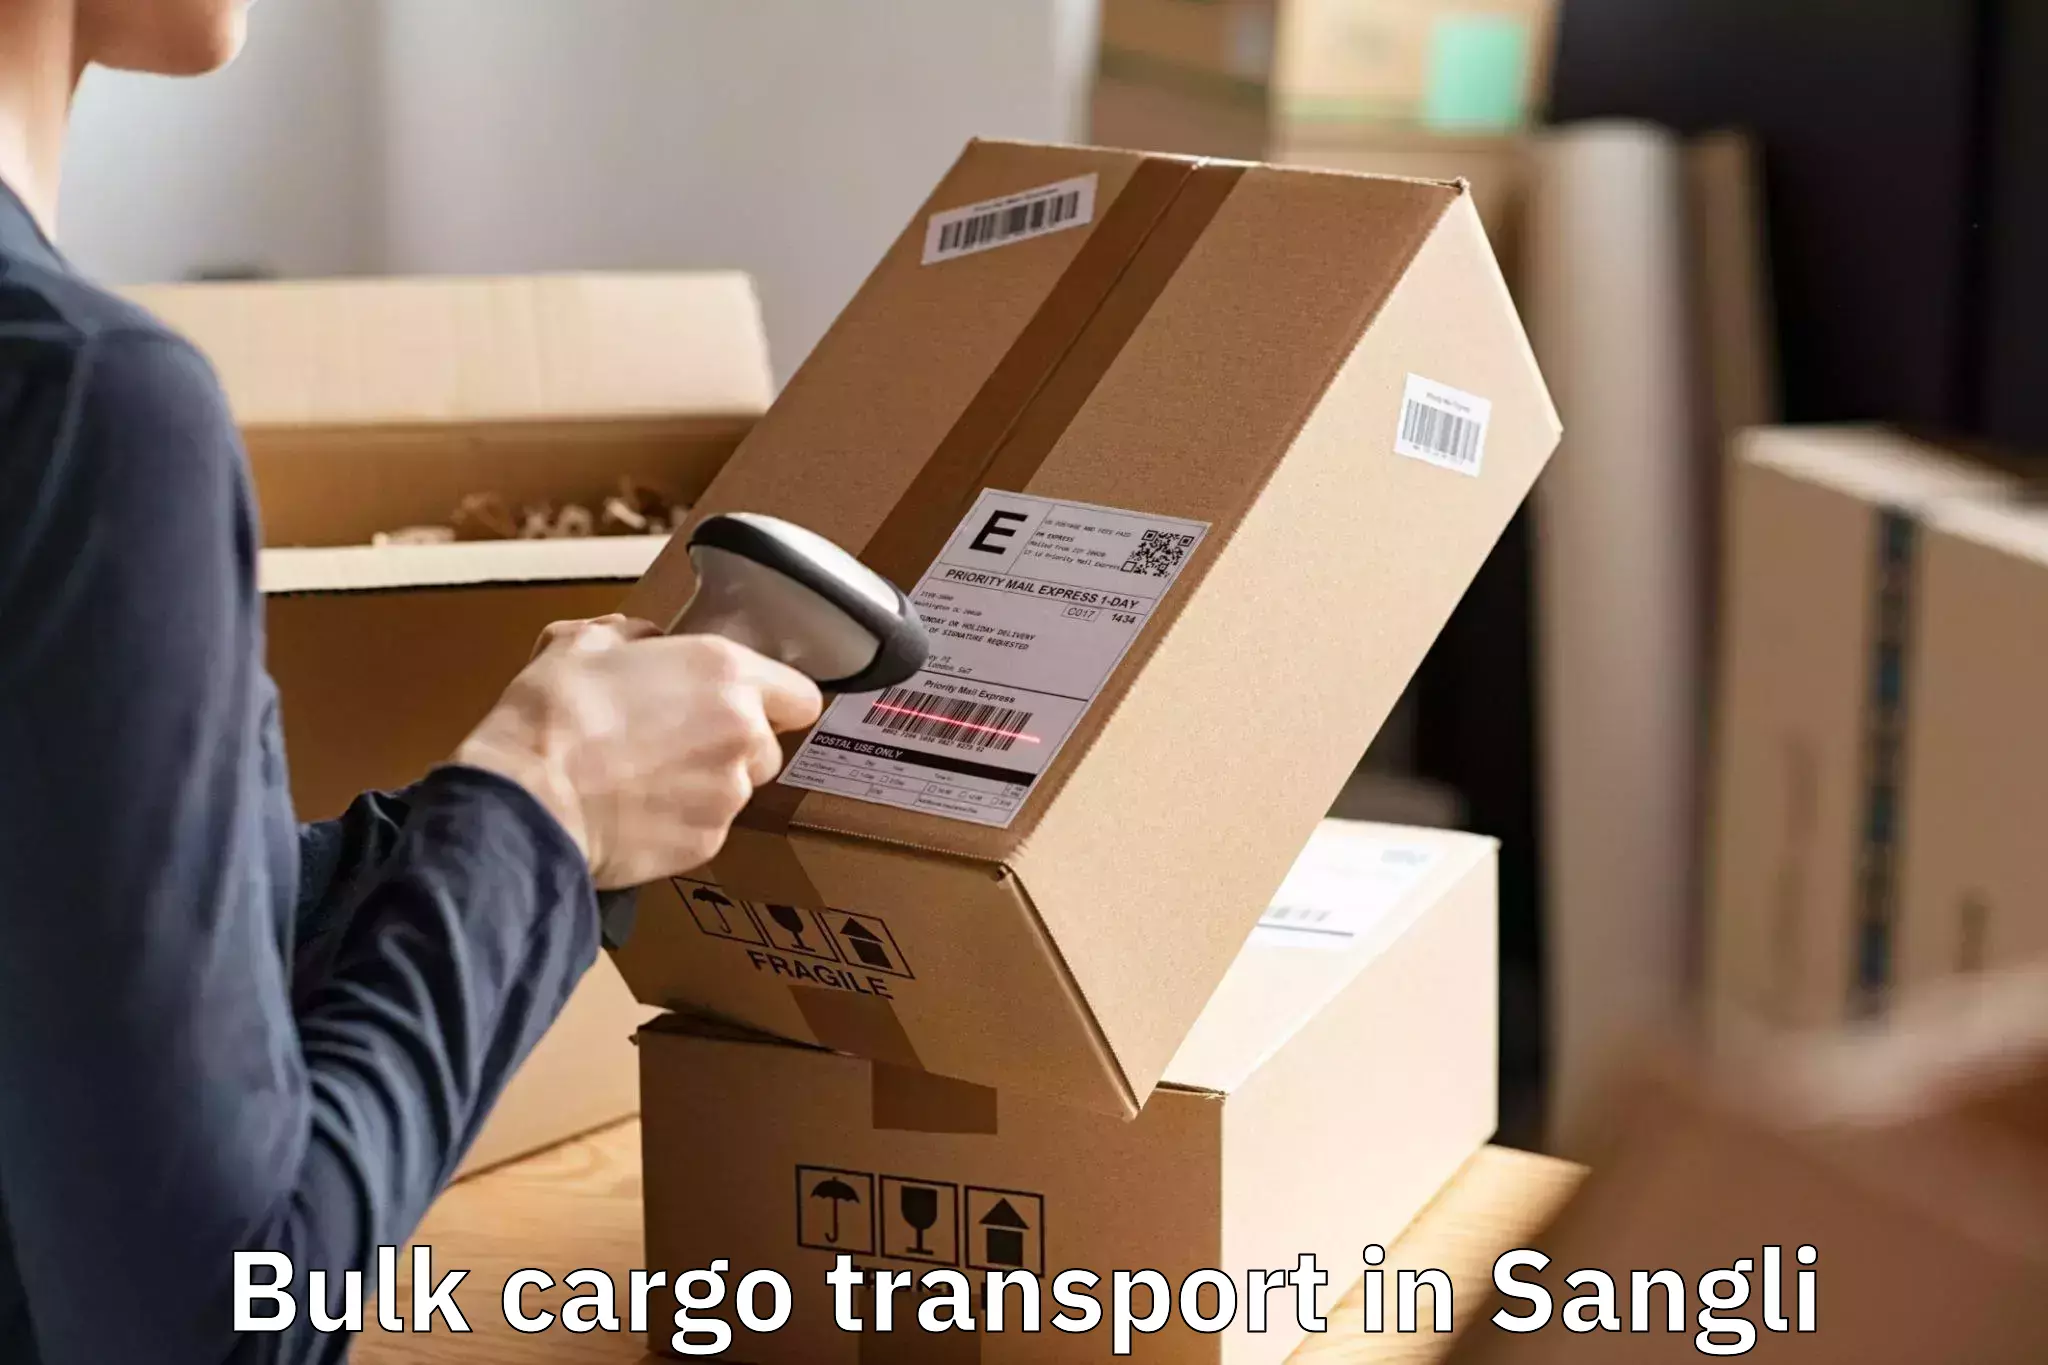 Get Bulk Cargo Transport in Sangli, Maharashtra (MH)